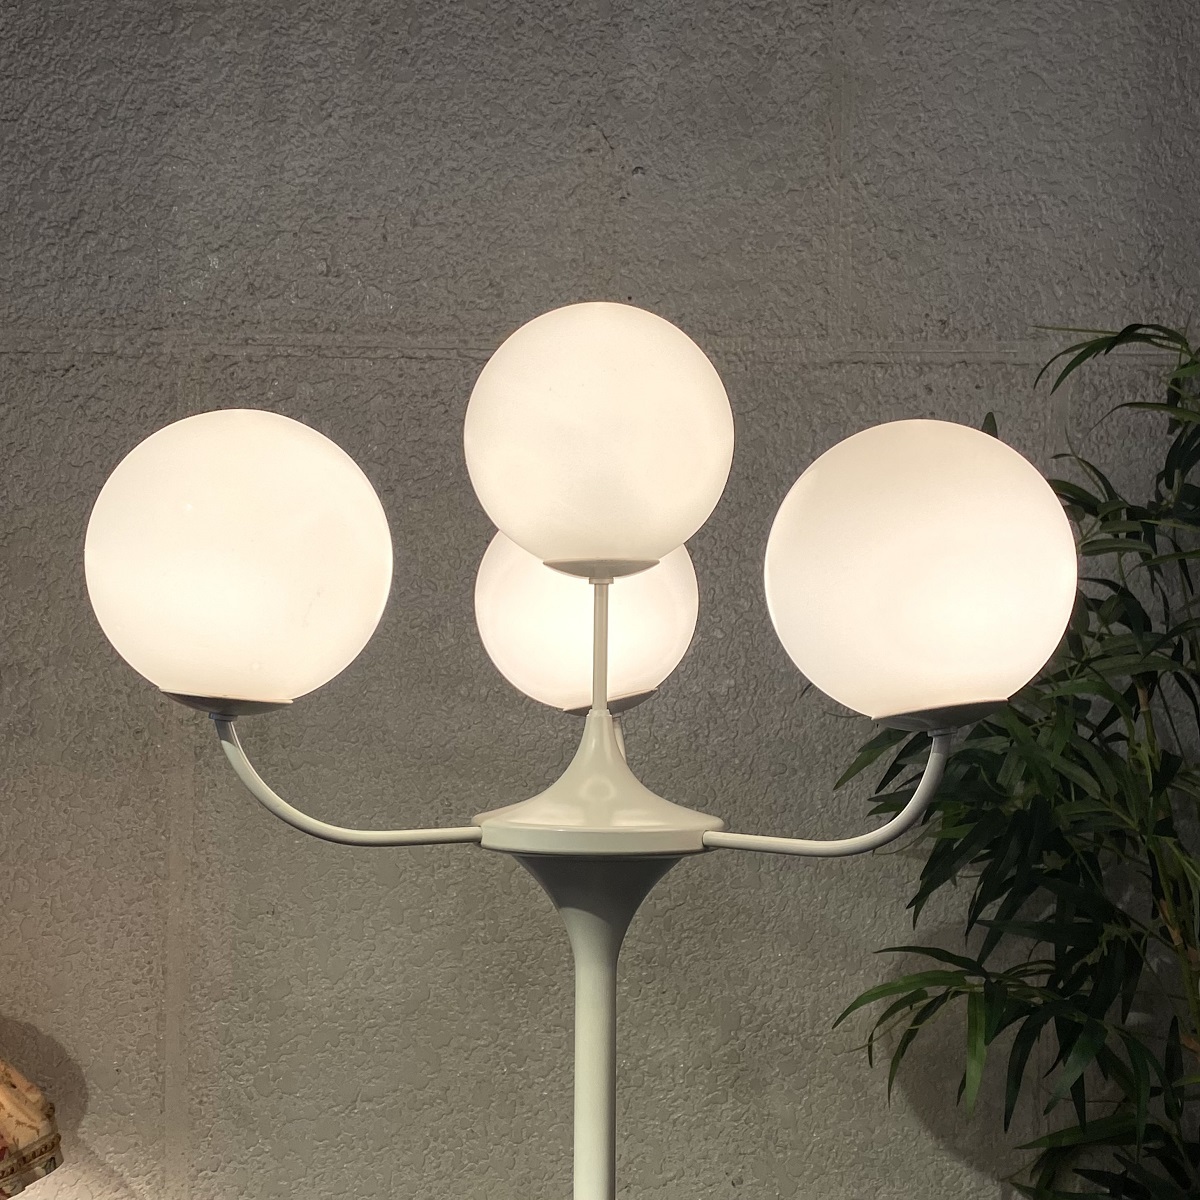 [ store receipt limitation ]Temde Leuchten E*R*Nele design Space Age Globe Floor Lamp 4 light 